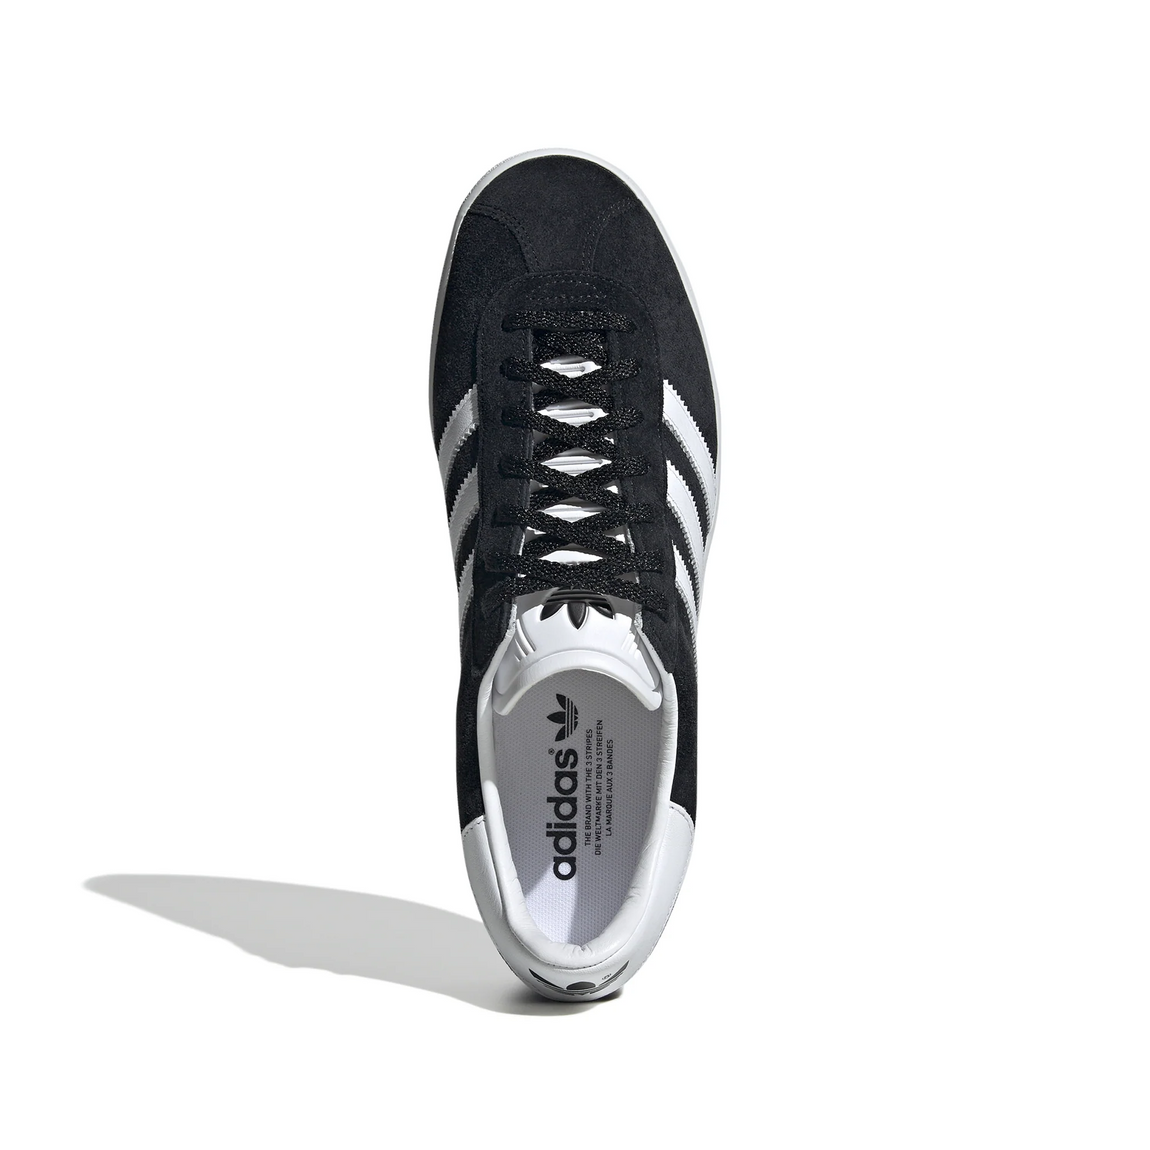 Adidas Gazelle 85 (Core Black/Footwear White-Gold Metallic) - Adidas Gazelle 85 (Core Black/Footwear White-Gold Metallic) - 